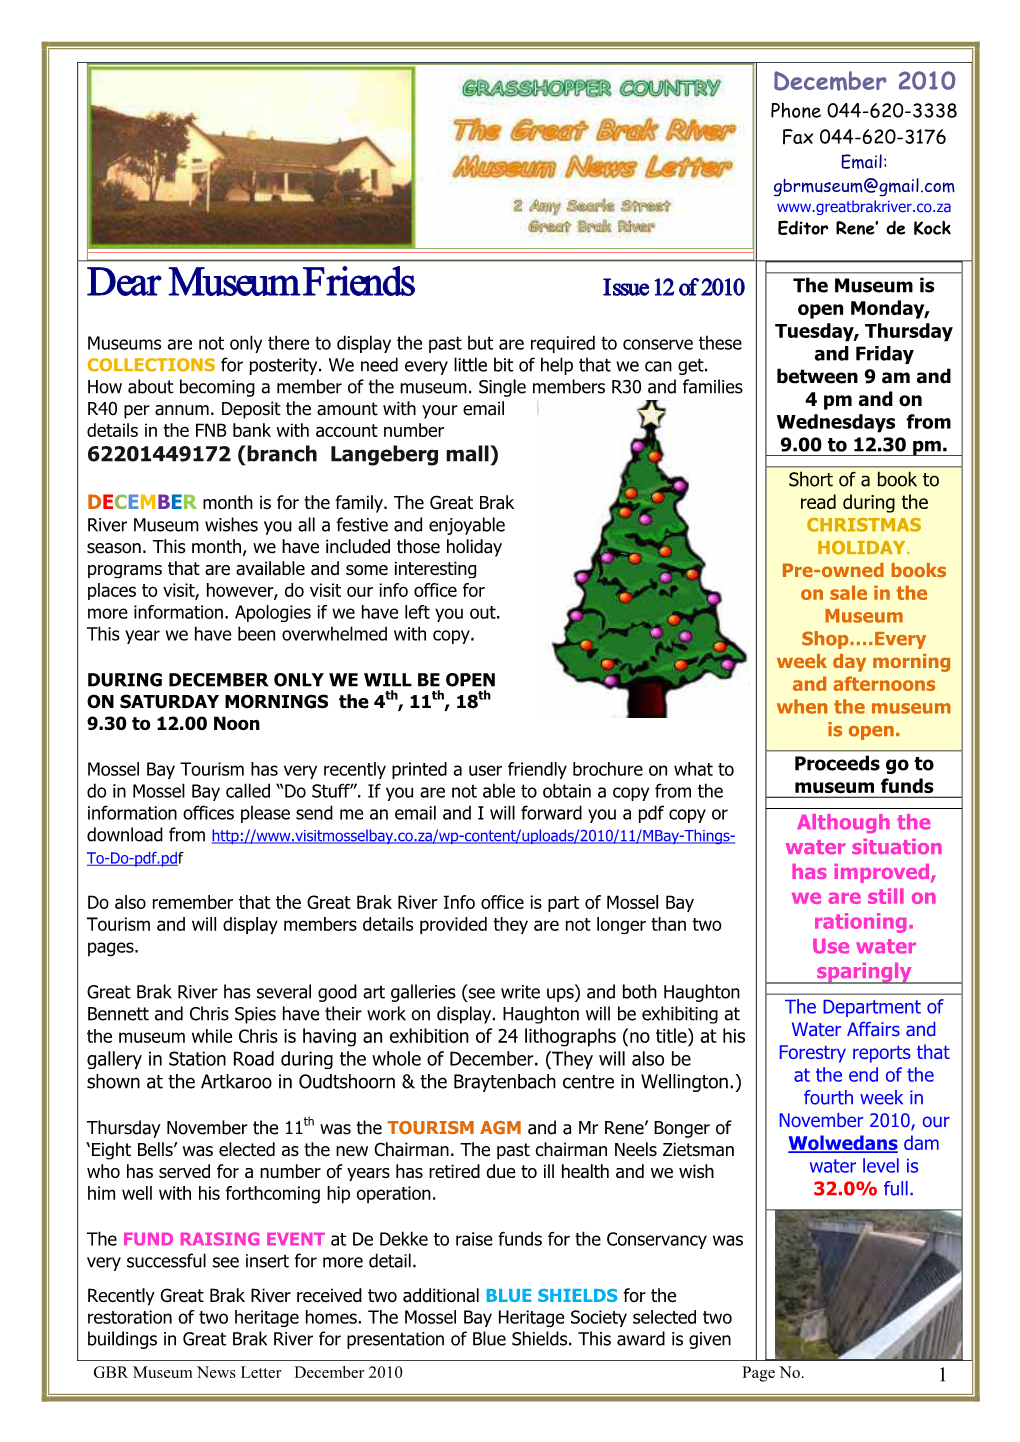 Dear Museum Friends Issue 12 of 2010